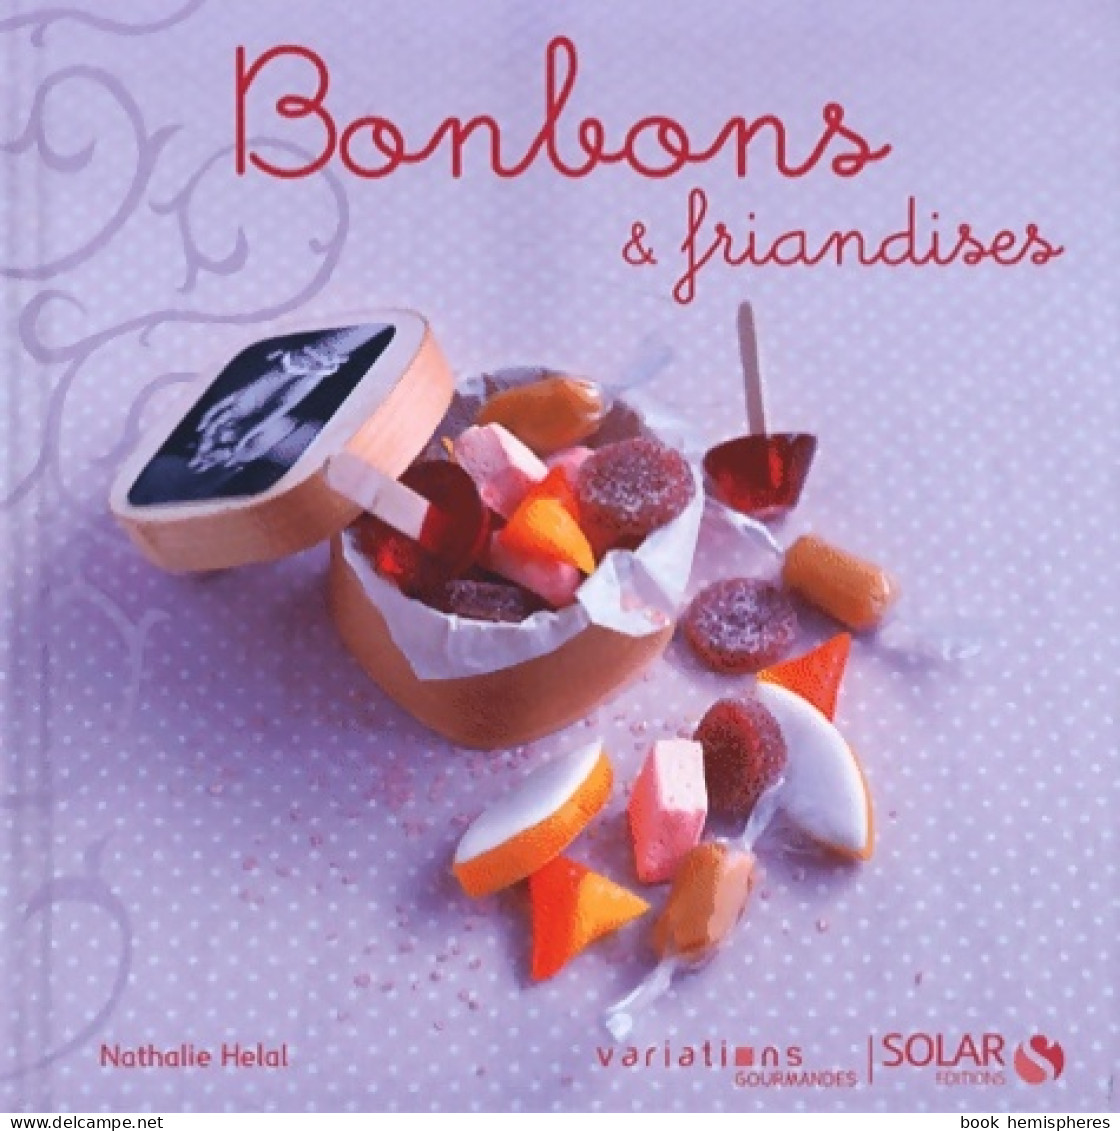 Bonbons & Friandises (2012) De Nathalie Helal - Gastronomía